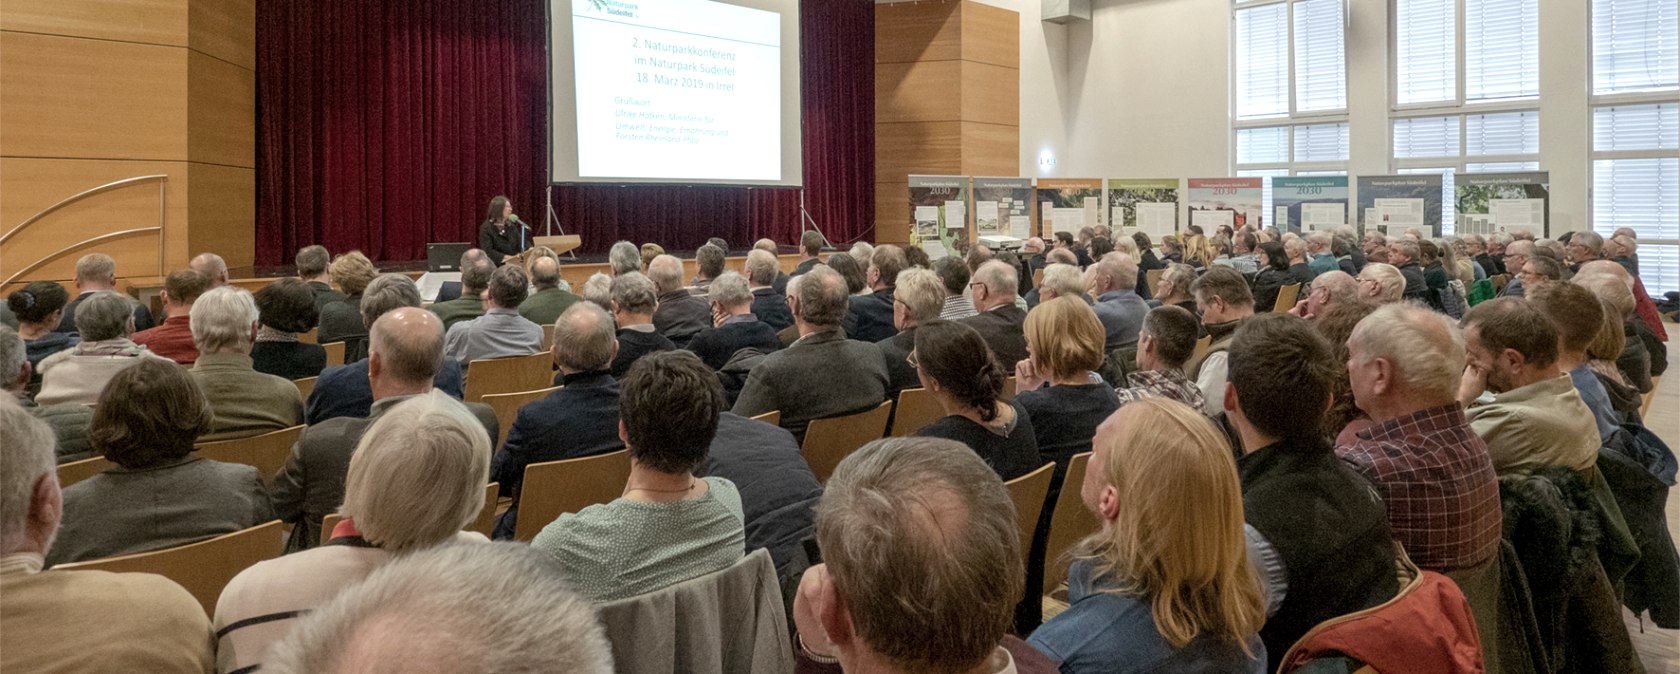 Auditorium bei der 2. Naturparkkonferenz Südeifel am 18.03.2019, © Naturpark Südeifel